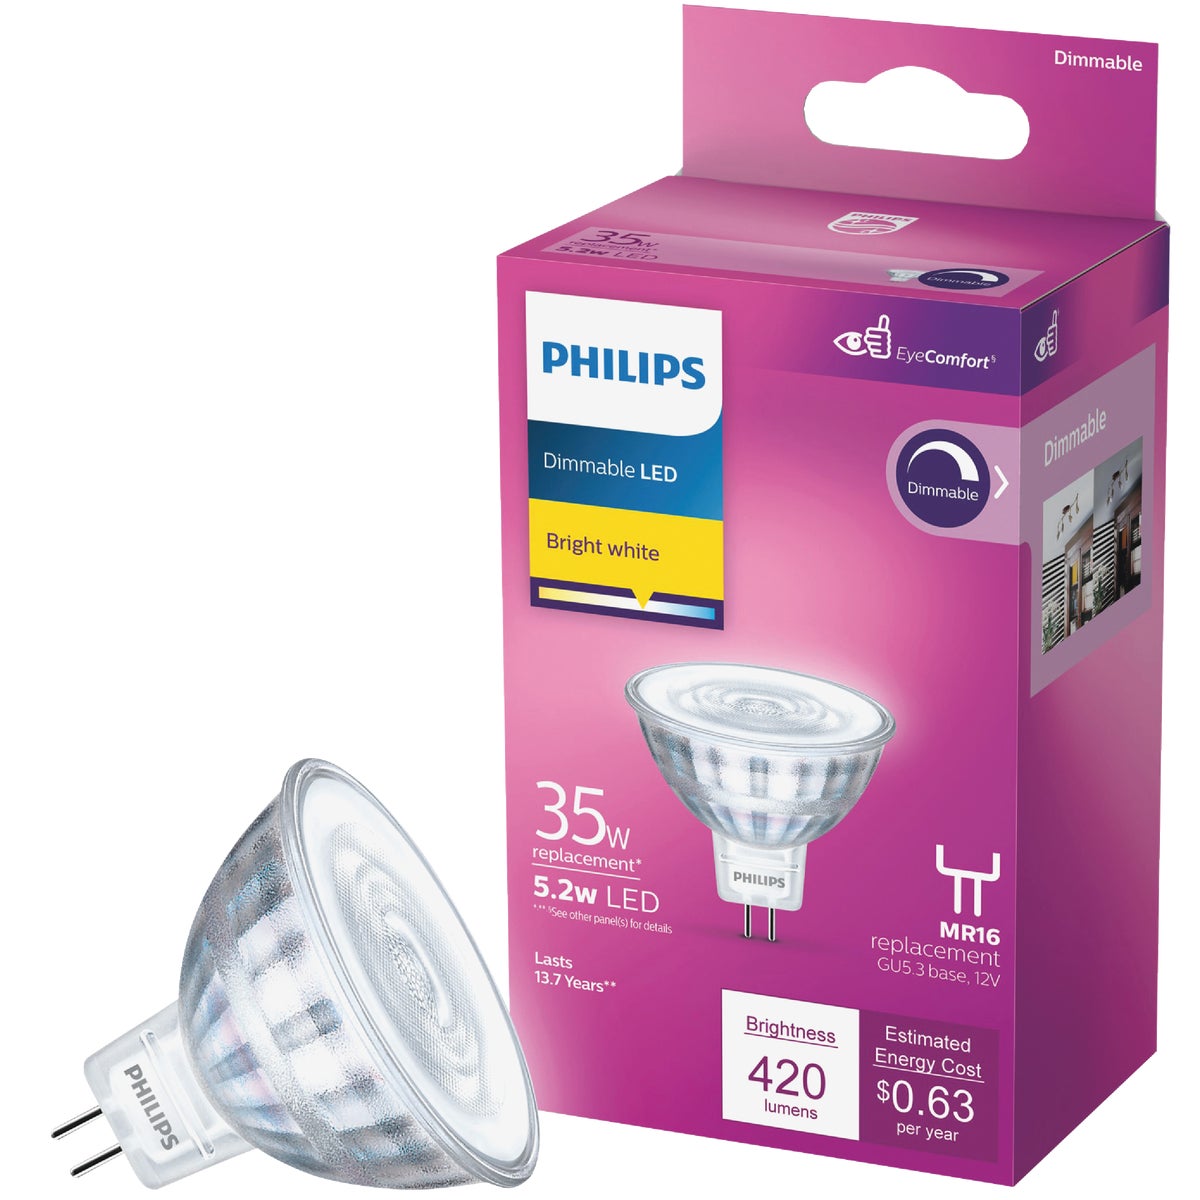 Philips 35W Equivalent Bright White MR16 GU5.3 Base LED Spotlight Light Bulb